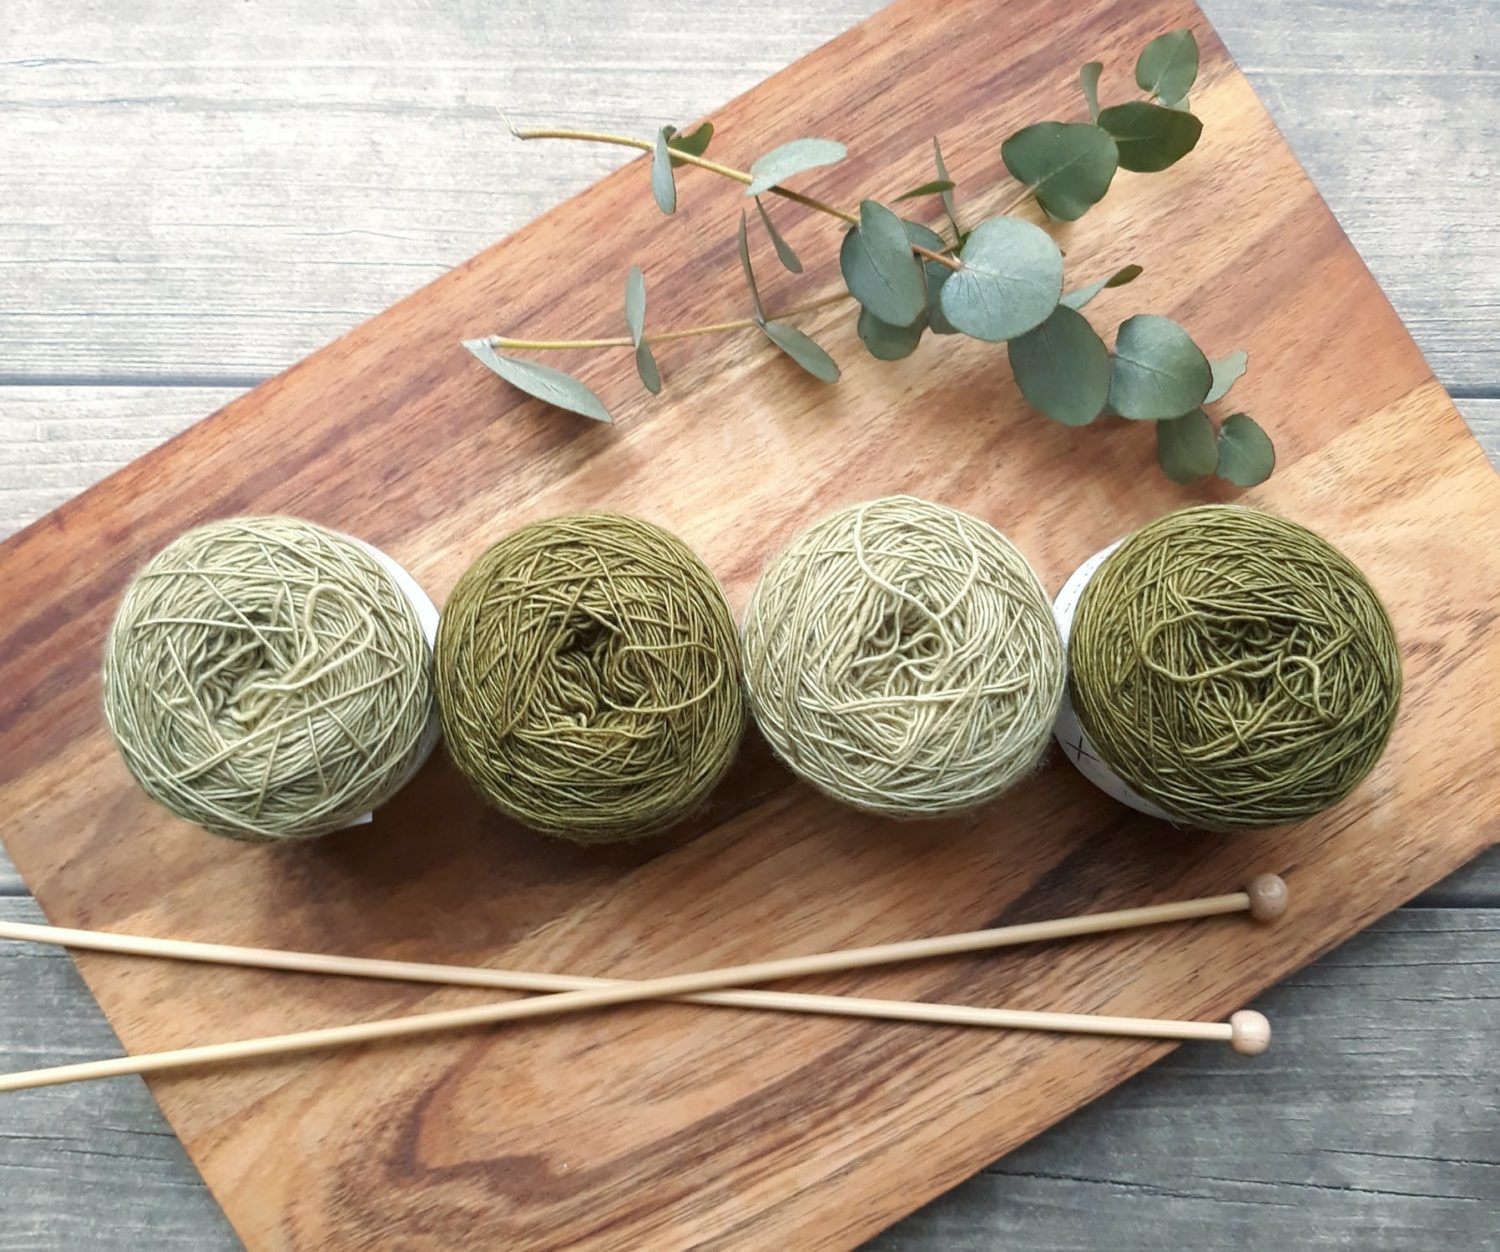 green yarn on board and knitting needles